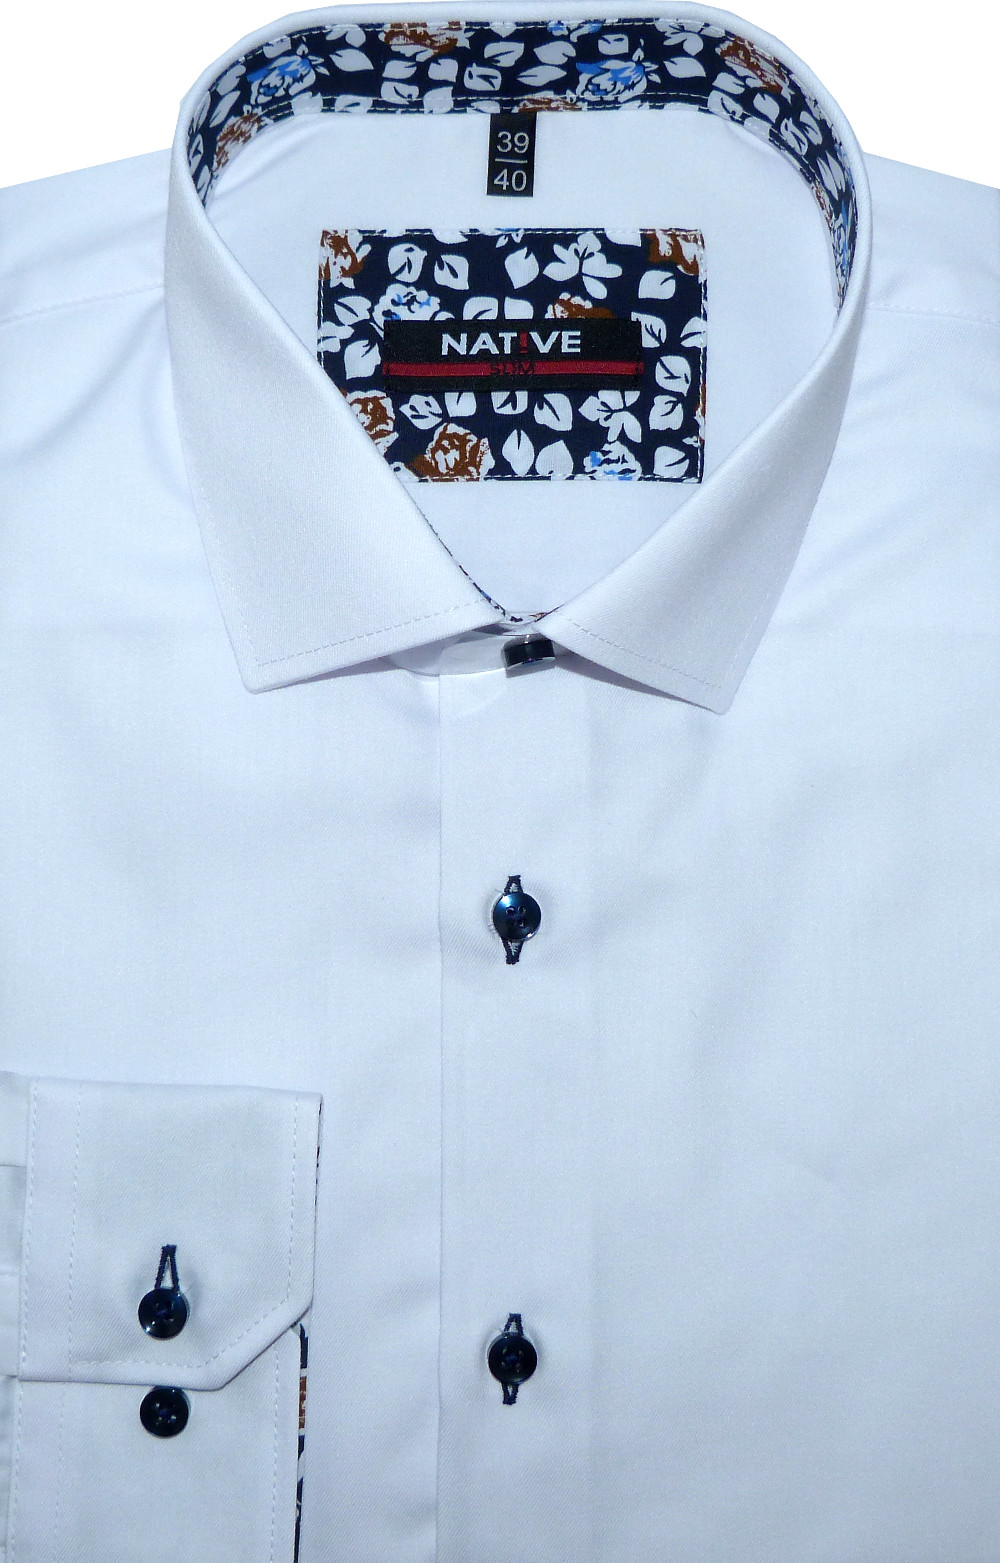 Pánská košile slim (bílá) s dlouhým rukávem, vel. 39/40 - N195/915